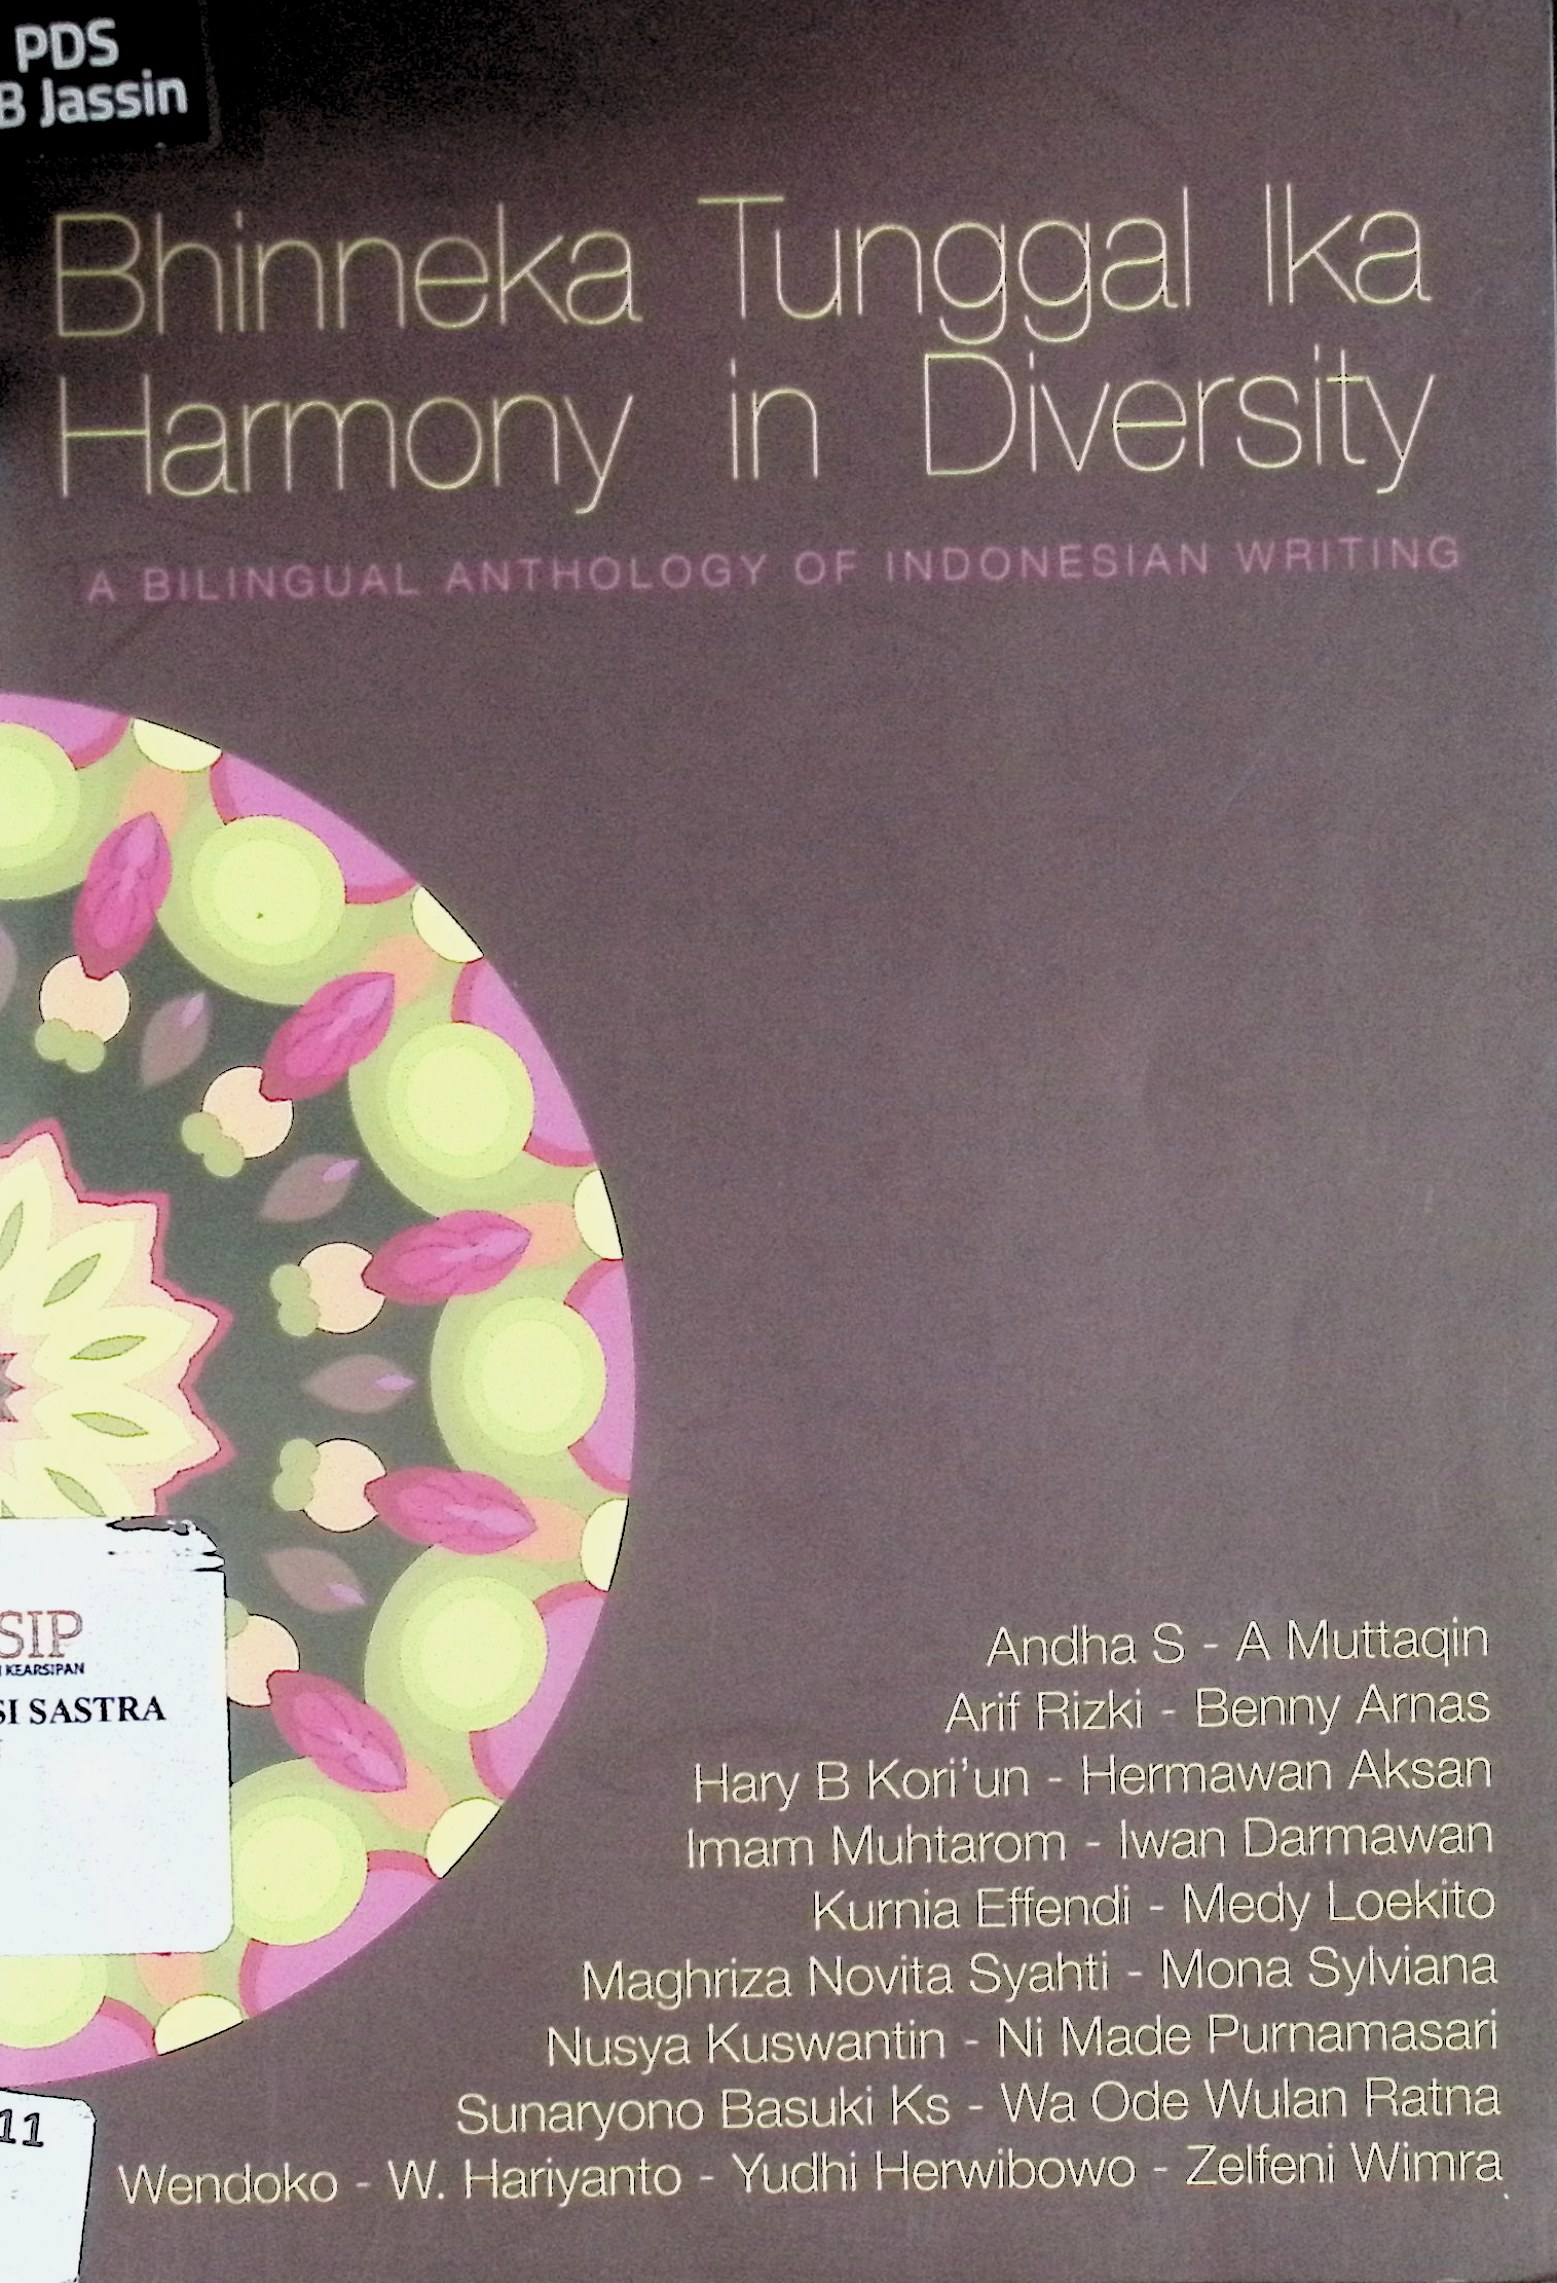 Bhinneka tunggal ika - harmony in diversity :  a bilingual anthology of Indonesian writing